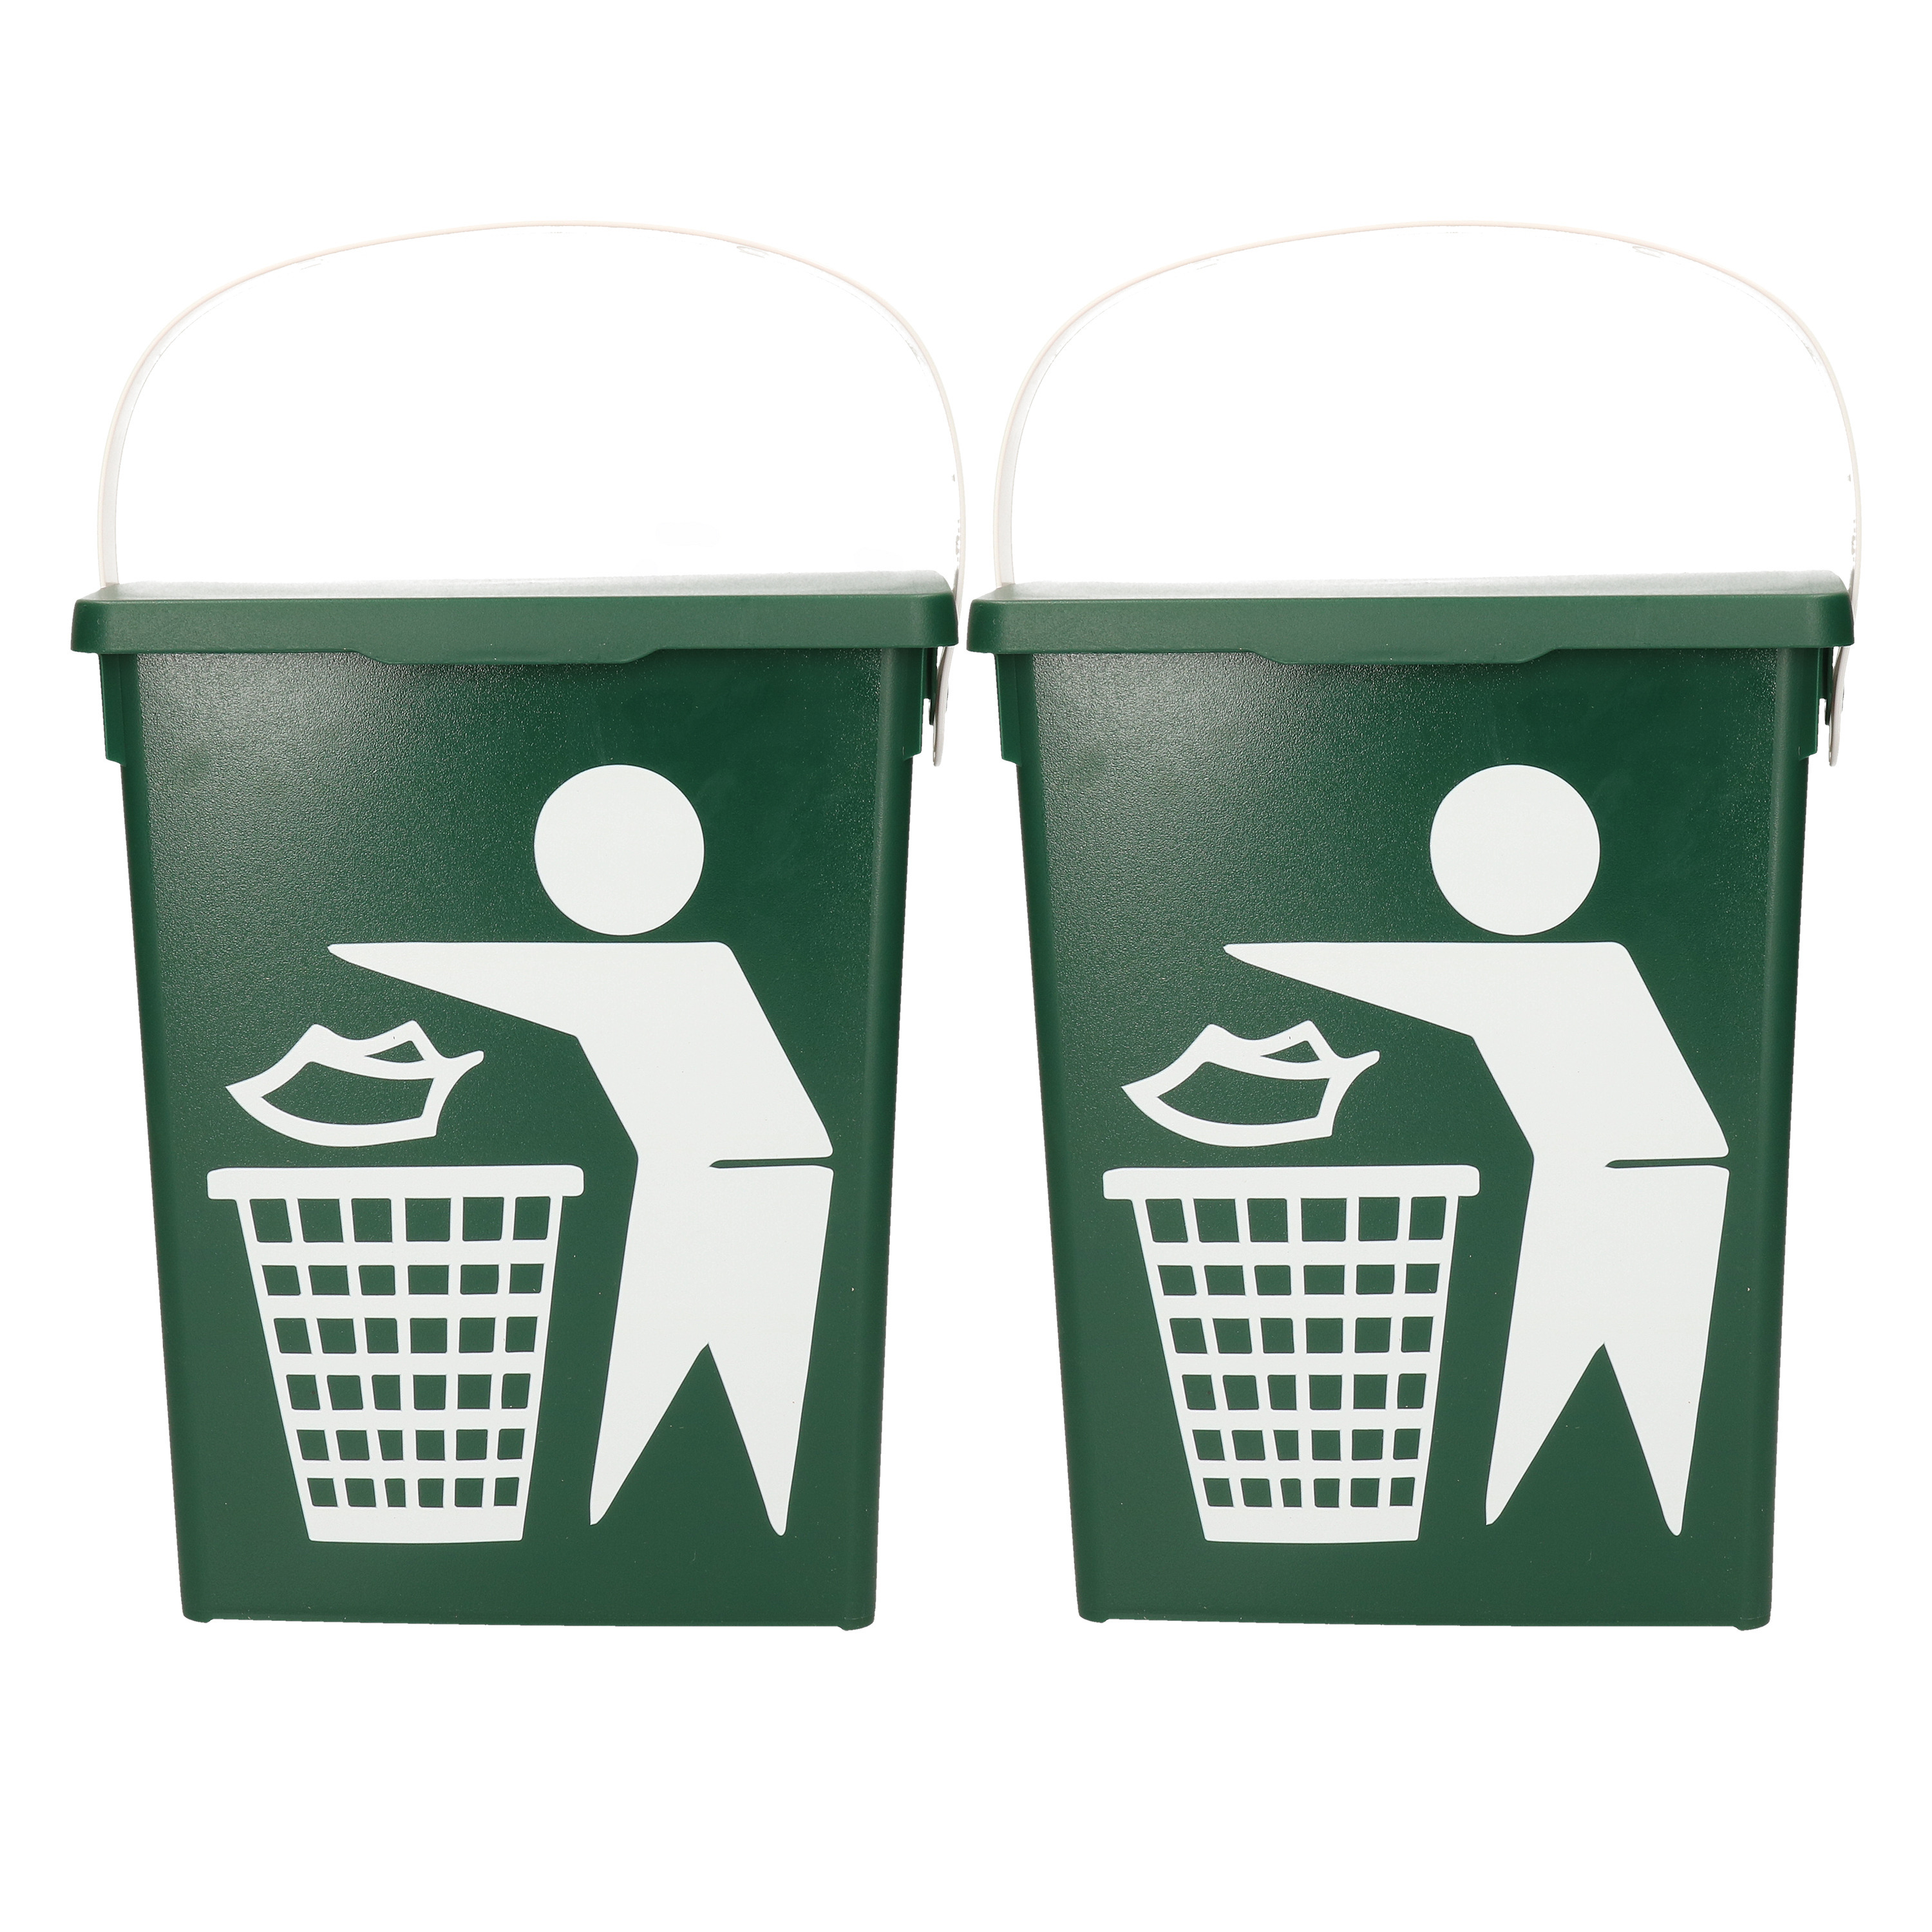 2x stuks groene vuilnisbakken-afvalbak voor gft-organisch afval 5 liter